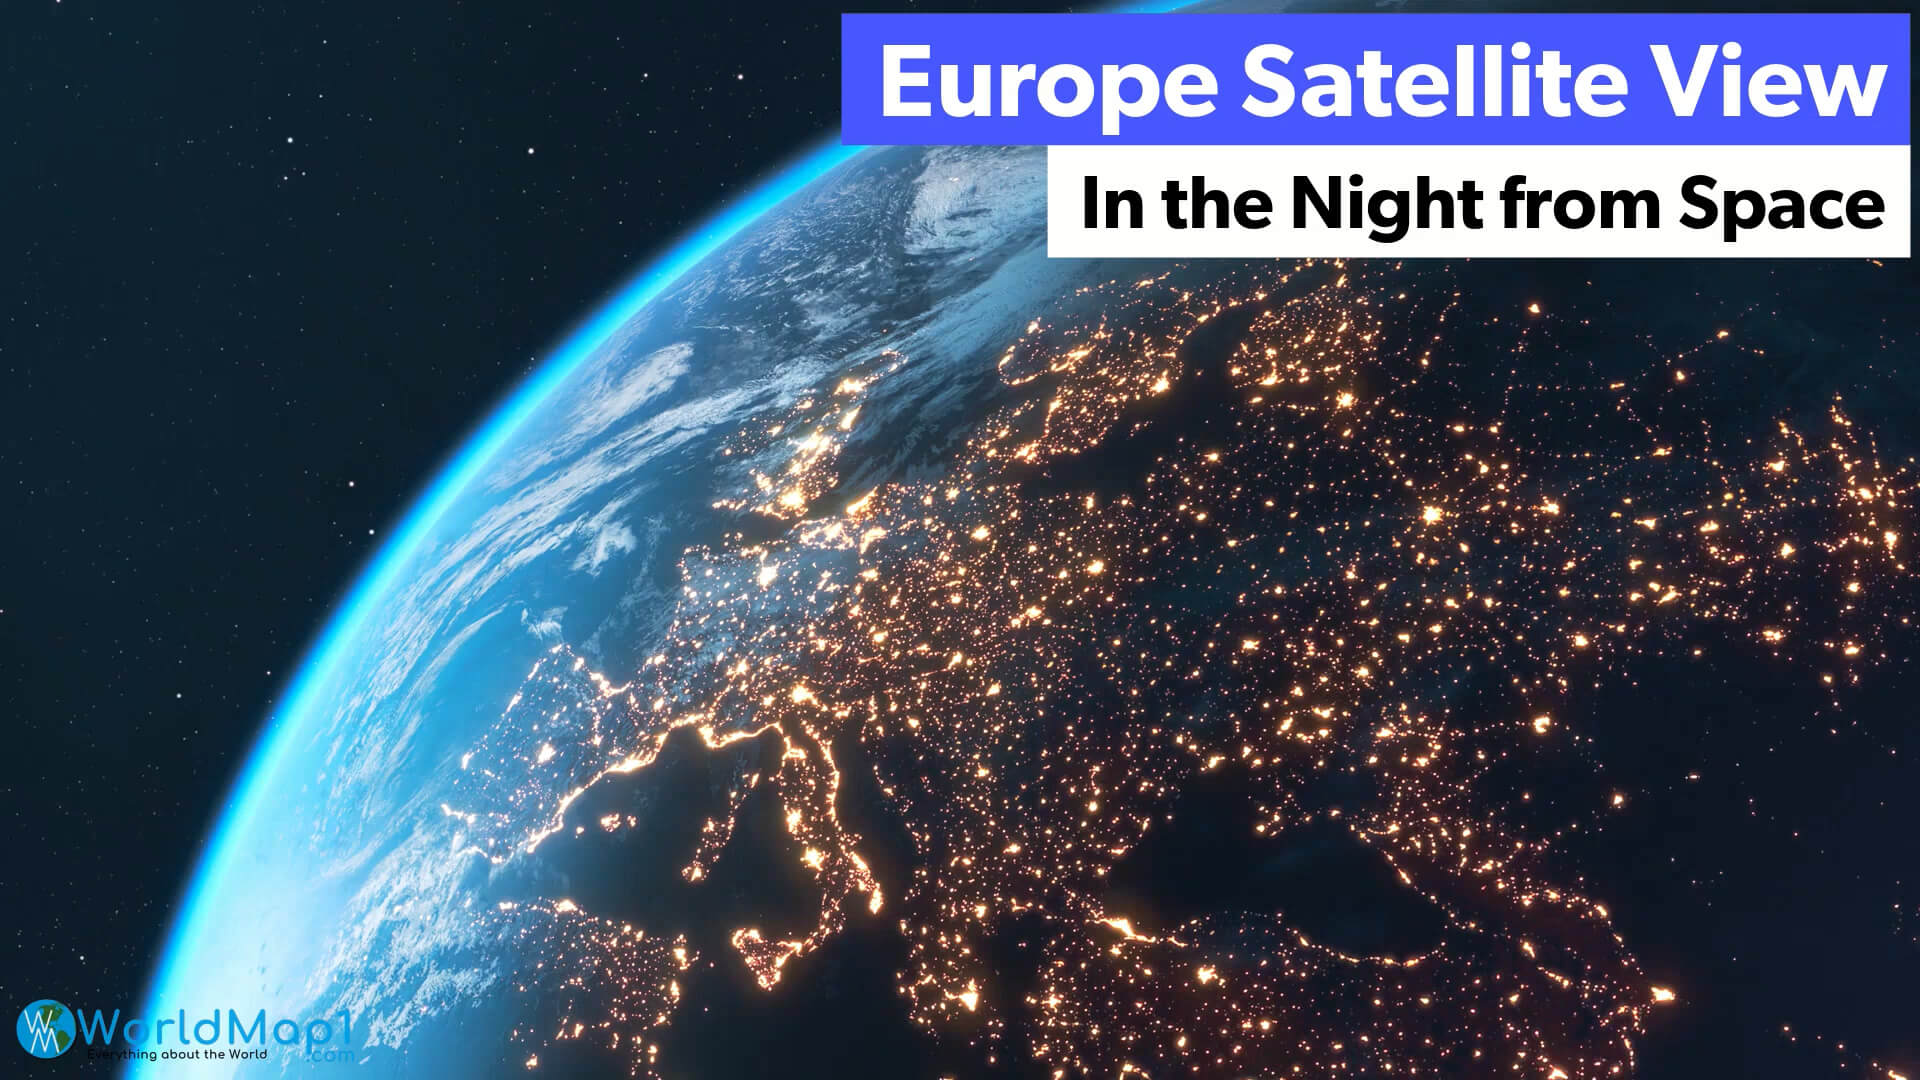 Europe Satellite View in the Night